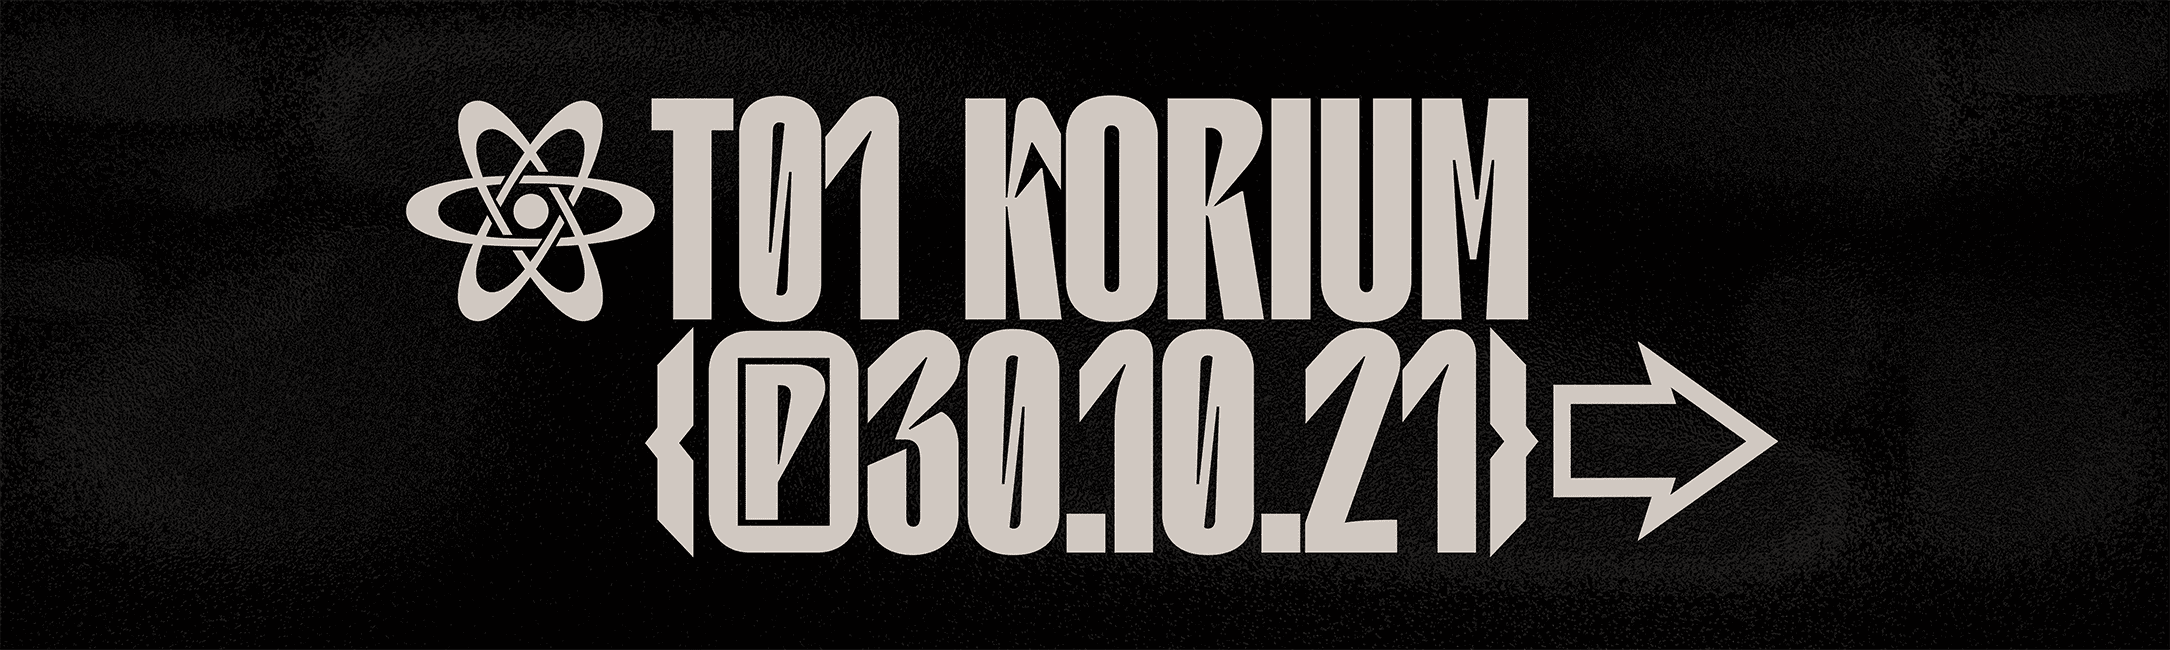 Korium_Banner-01-1.png